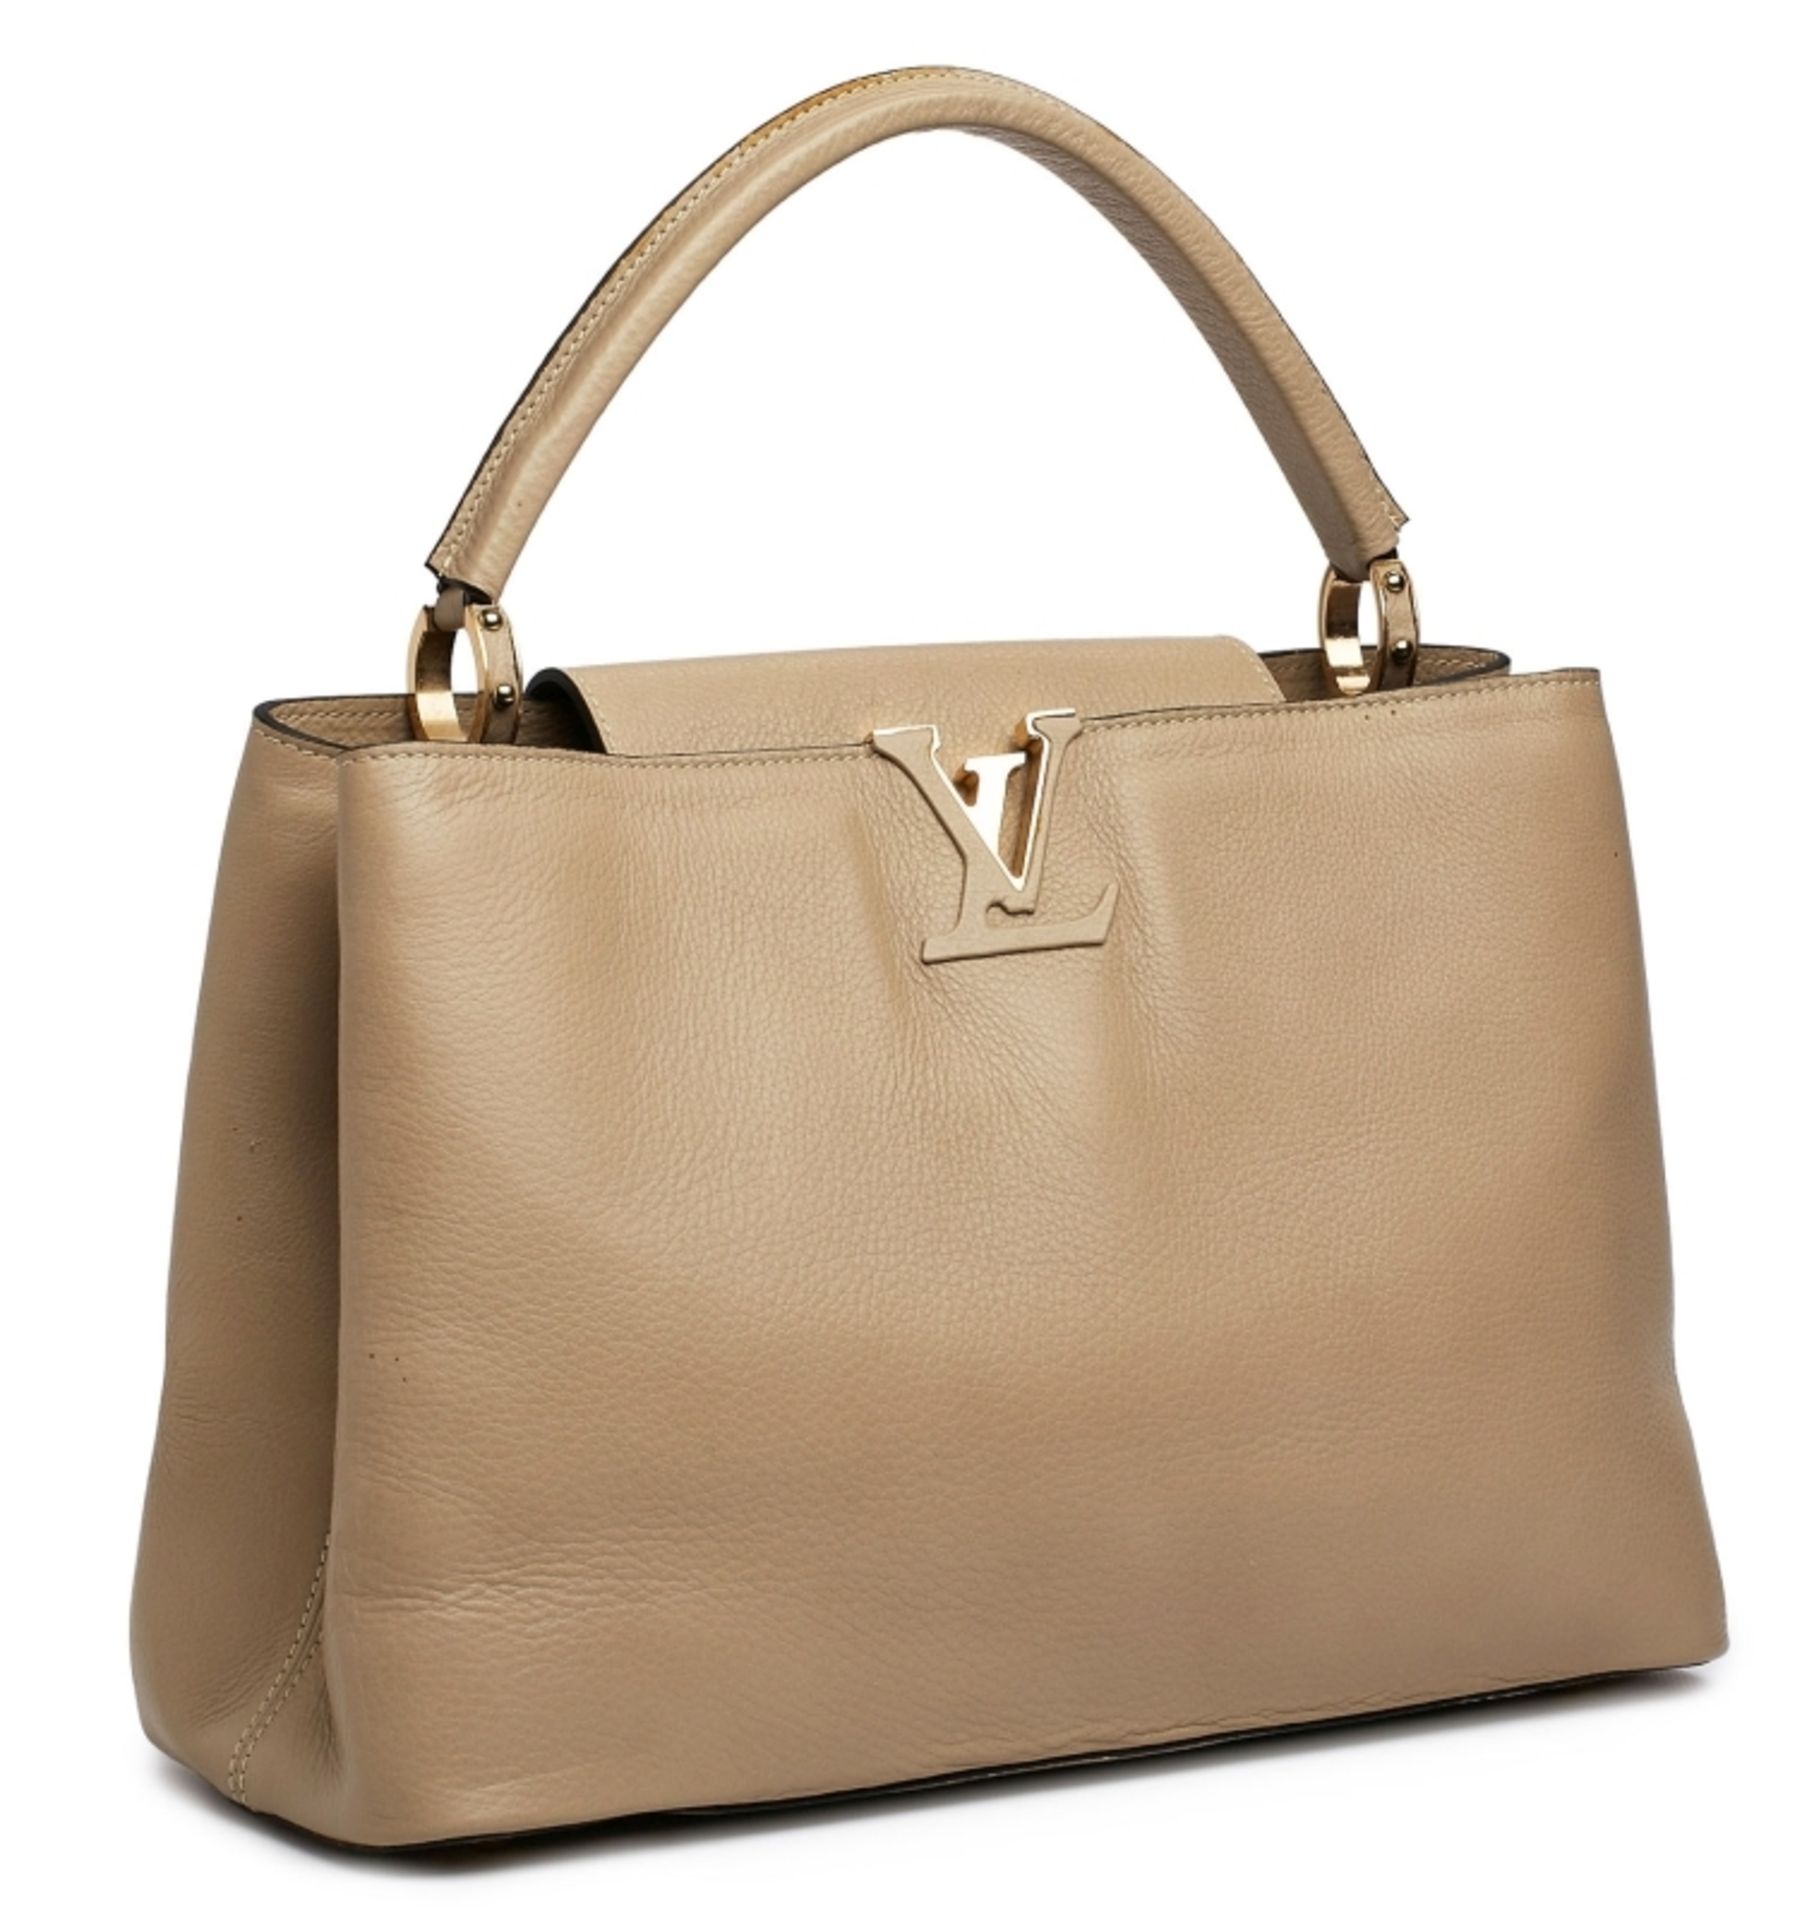 Handtasche "Capucines", Louis Vuitton wohl um 2015.